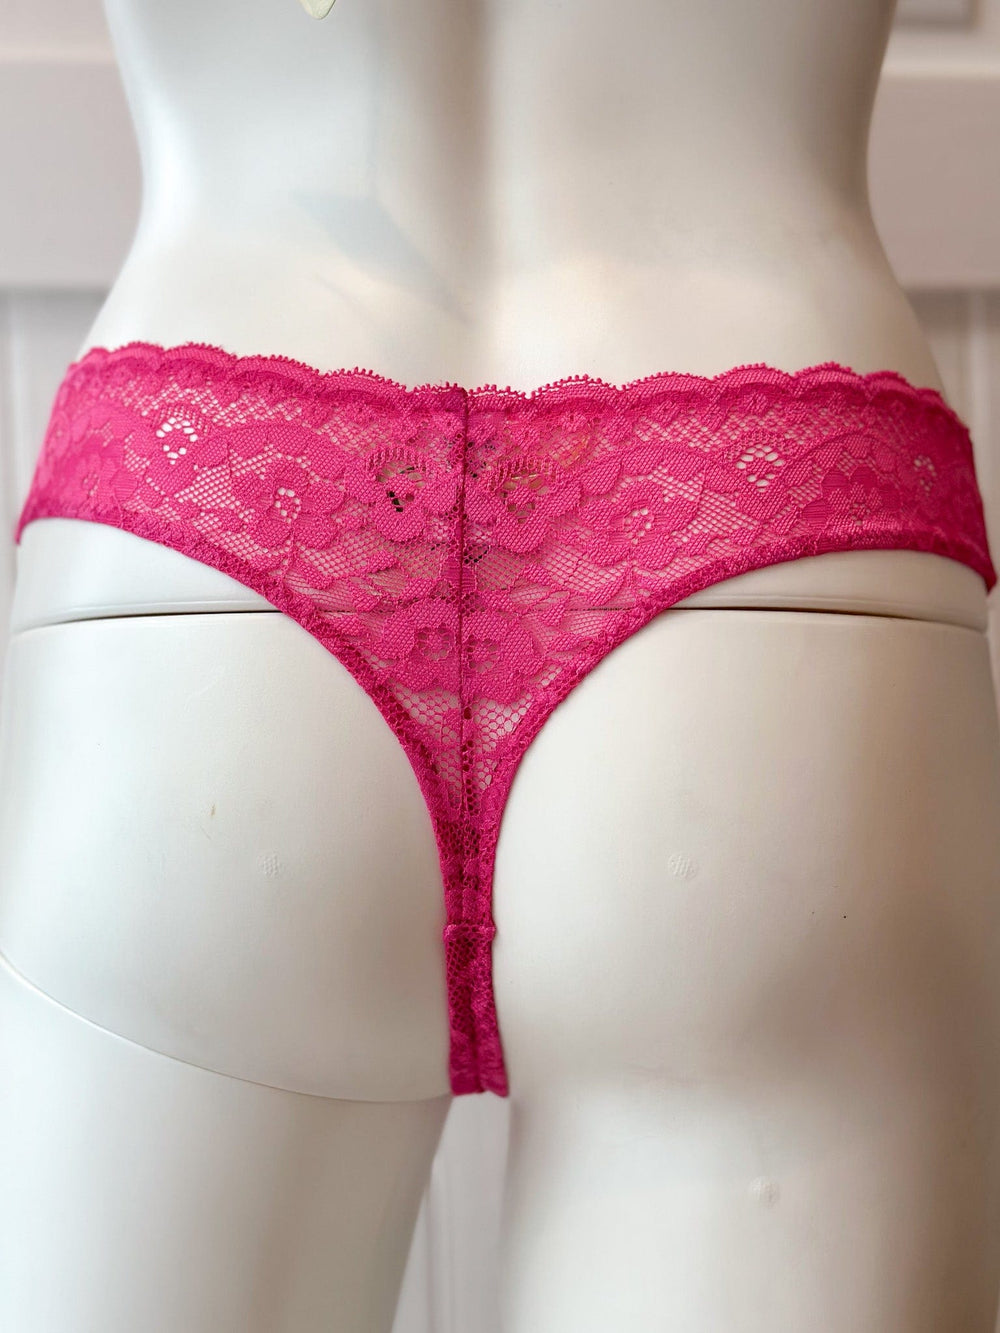 New Fantasie Underwear/Lingerie Melissa Magenta Thong 2937 Various